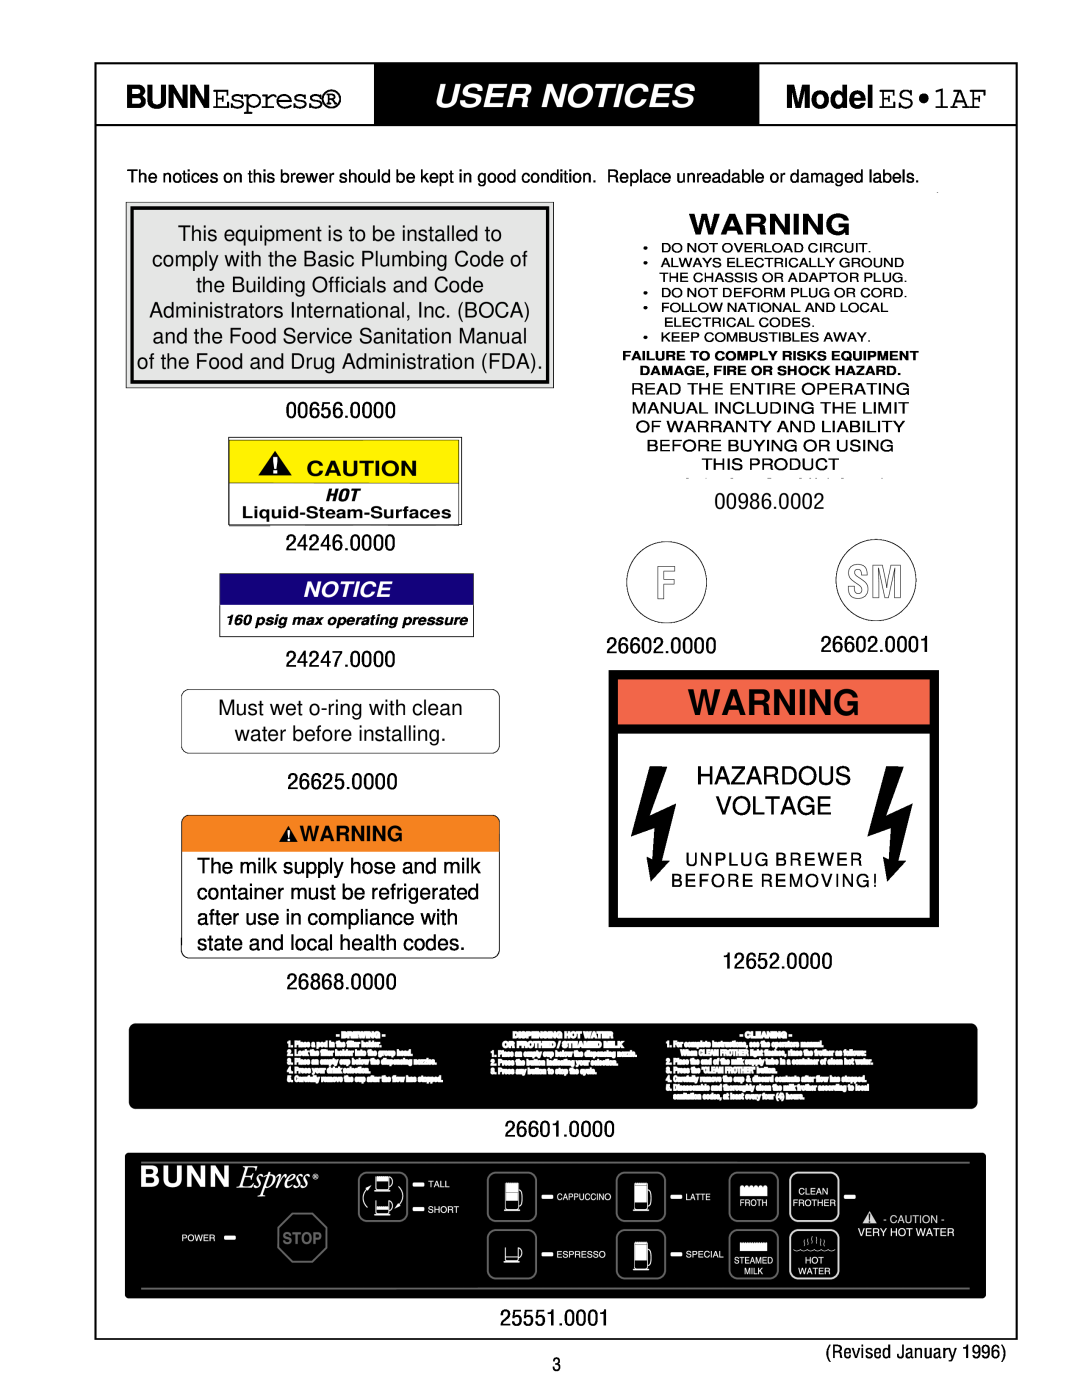 Bunn ES.1AF service manual User Notices, Hazardous Voltage, F Sm, BUNNEspress, Model ES1AF 